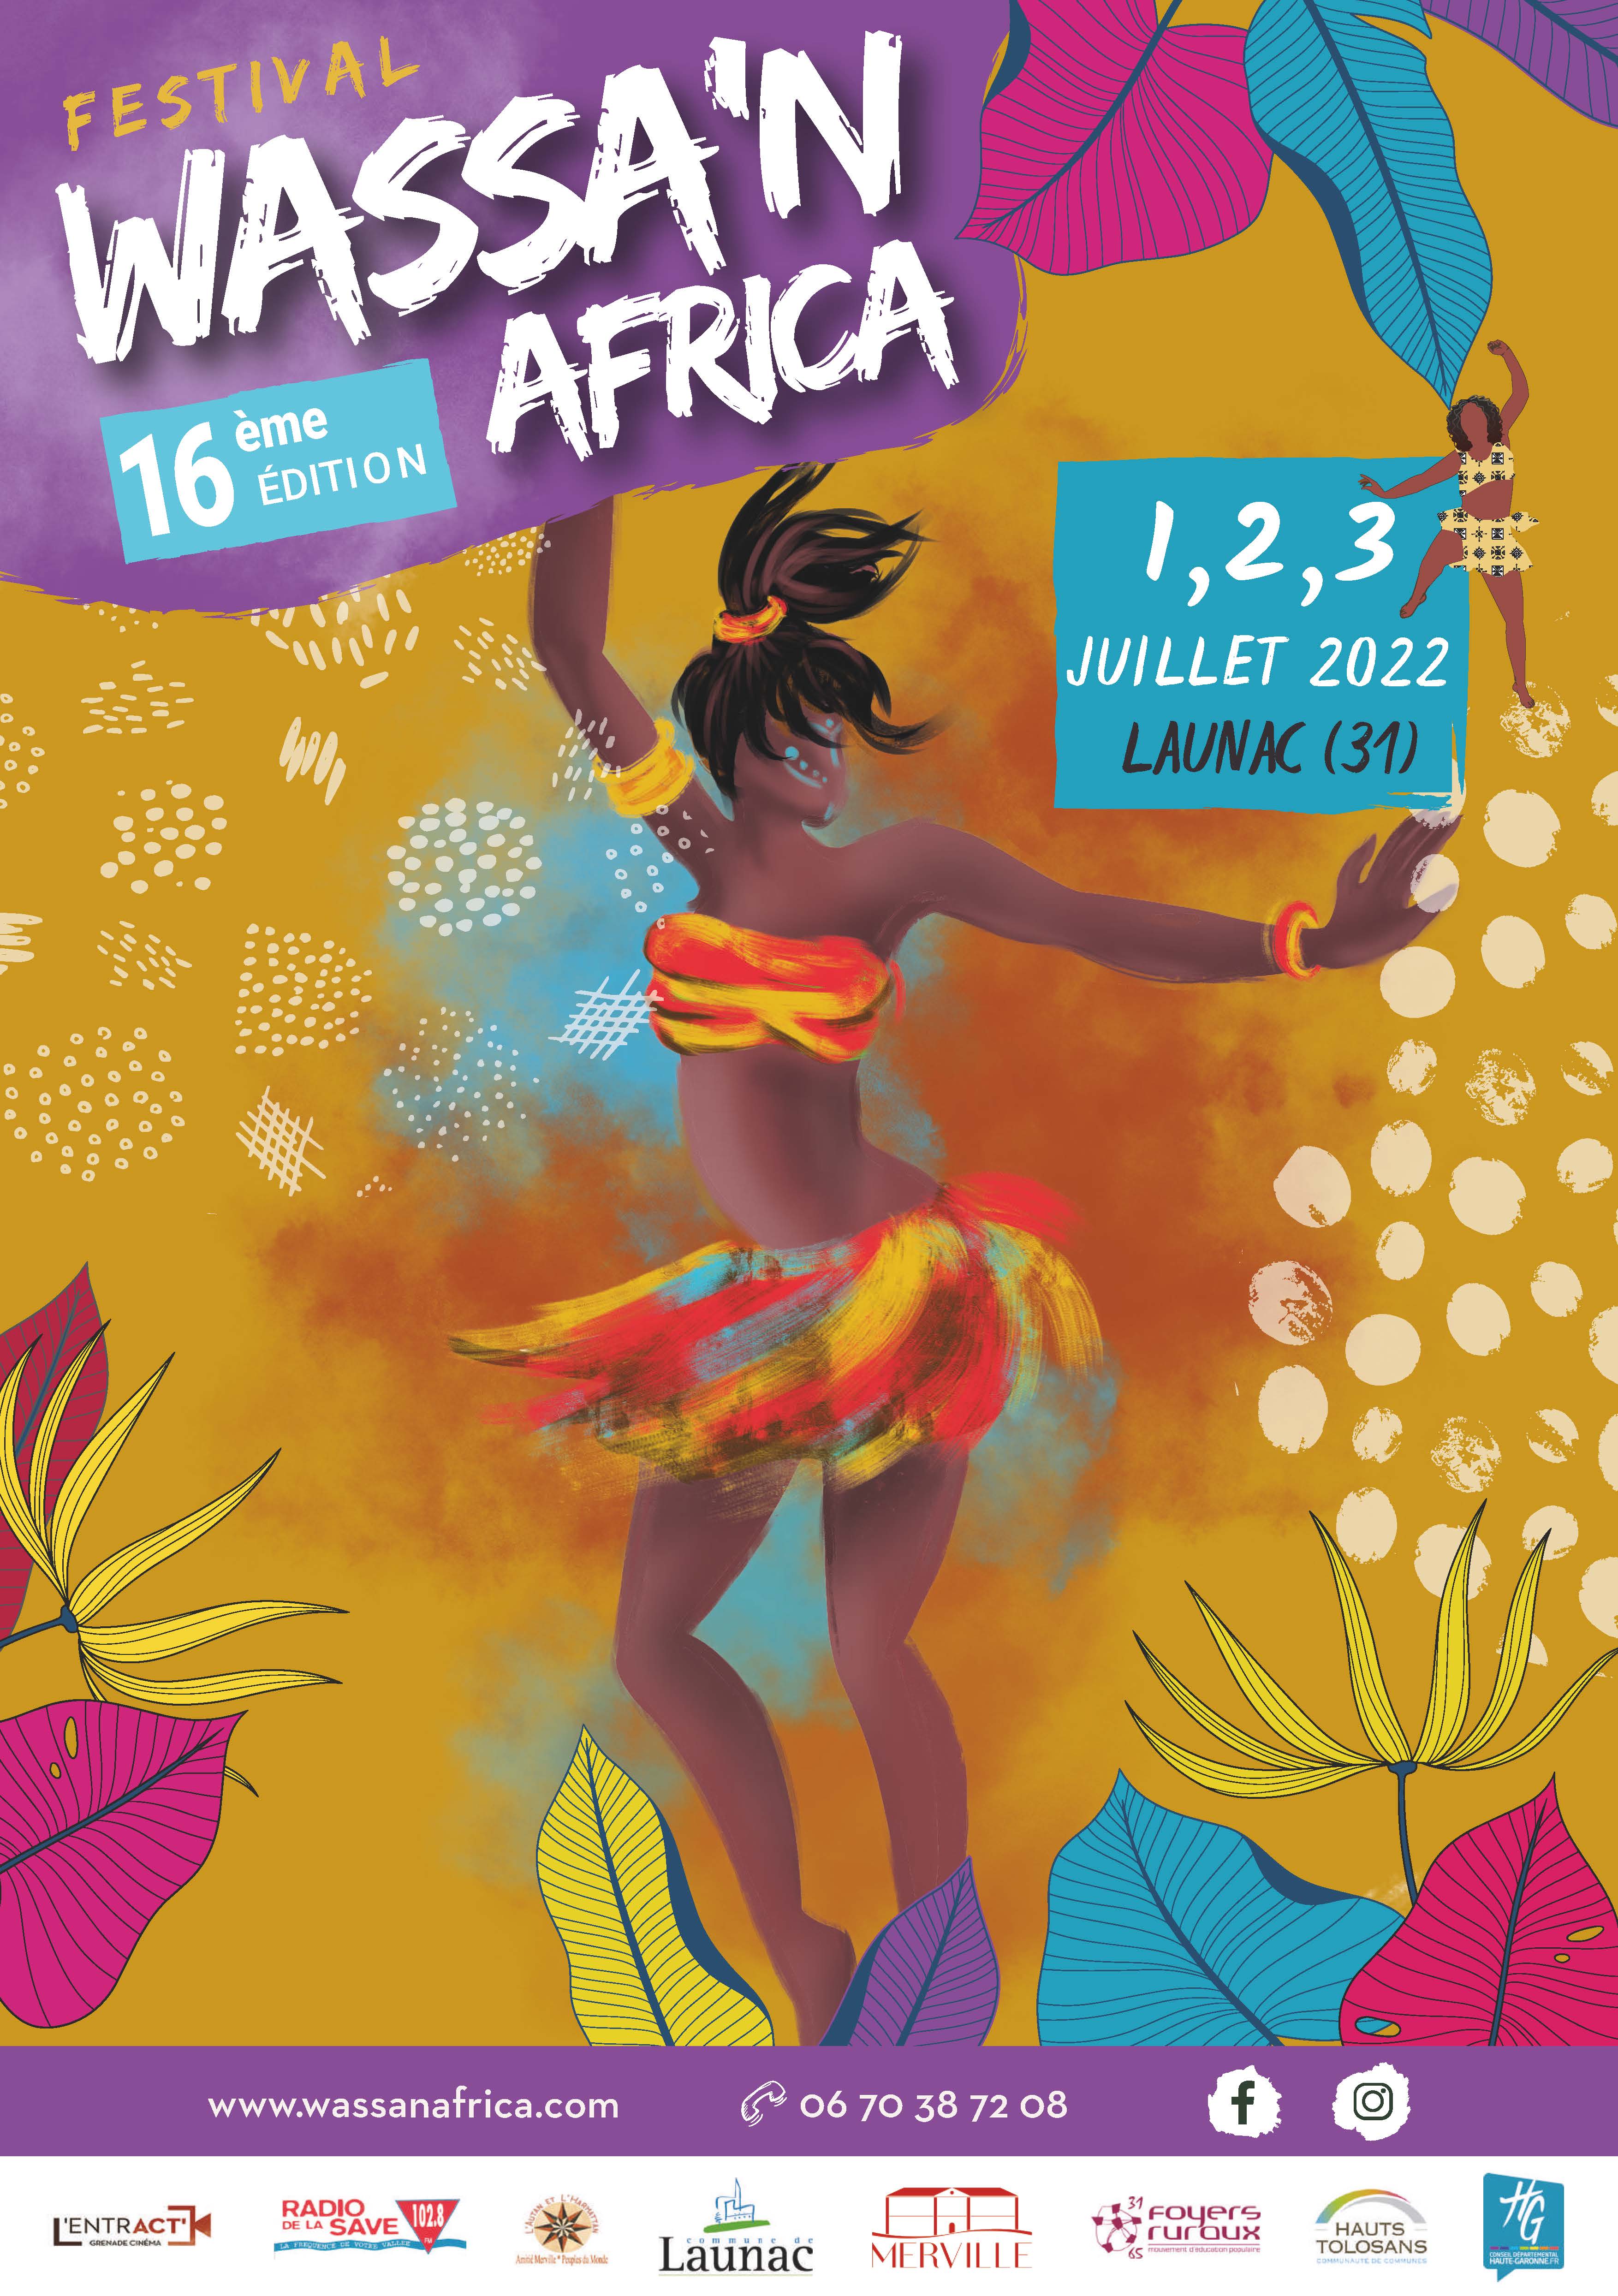 FESTIVAL WASSA'N AFRICA, LAUNAC